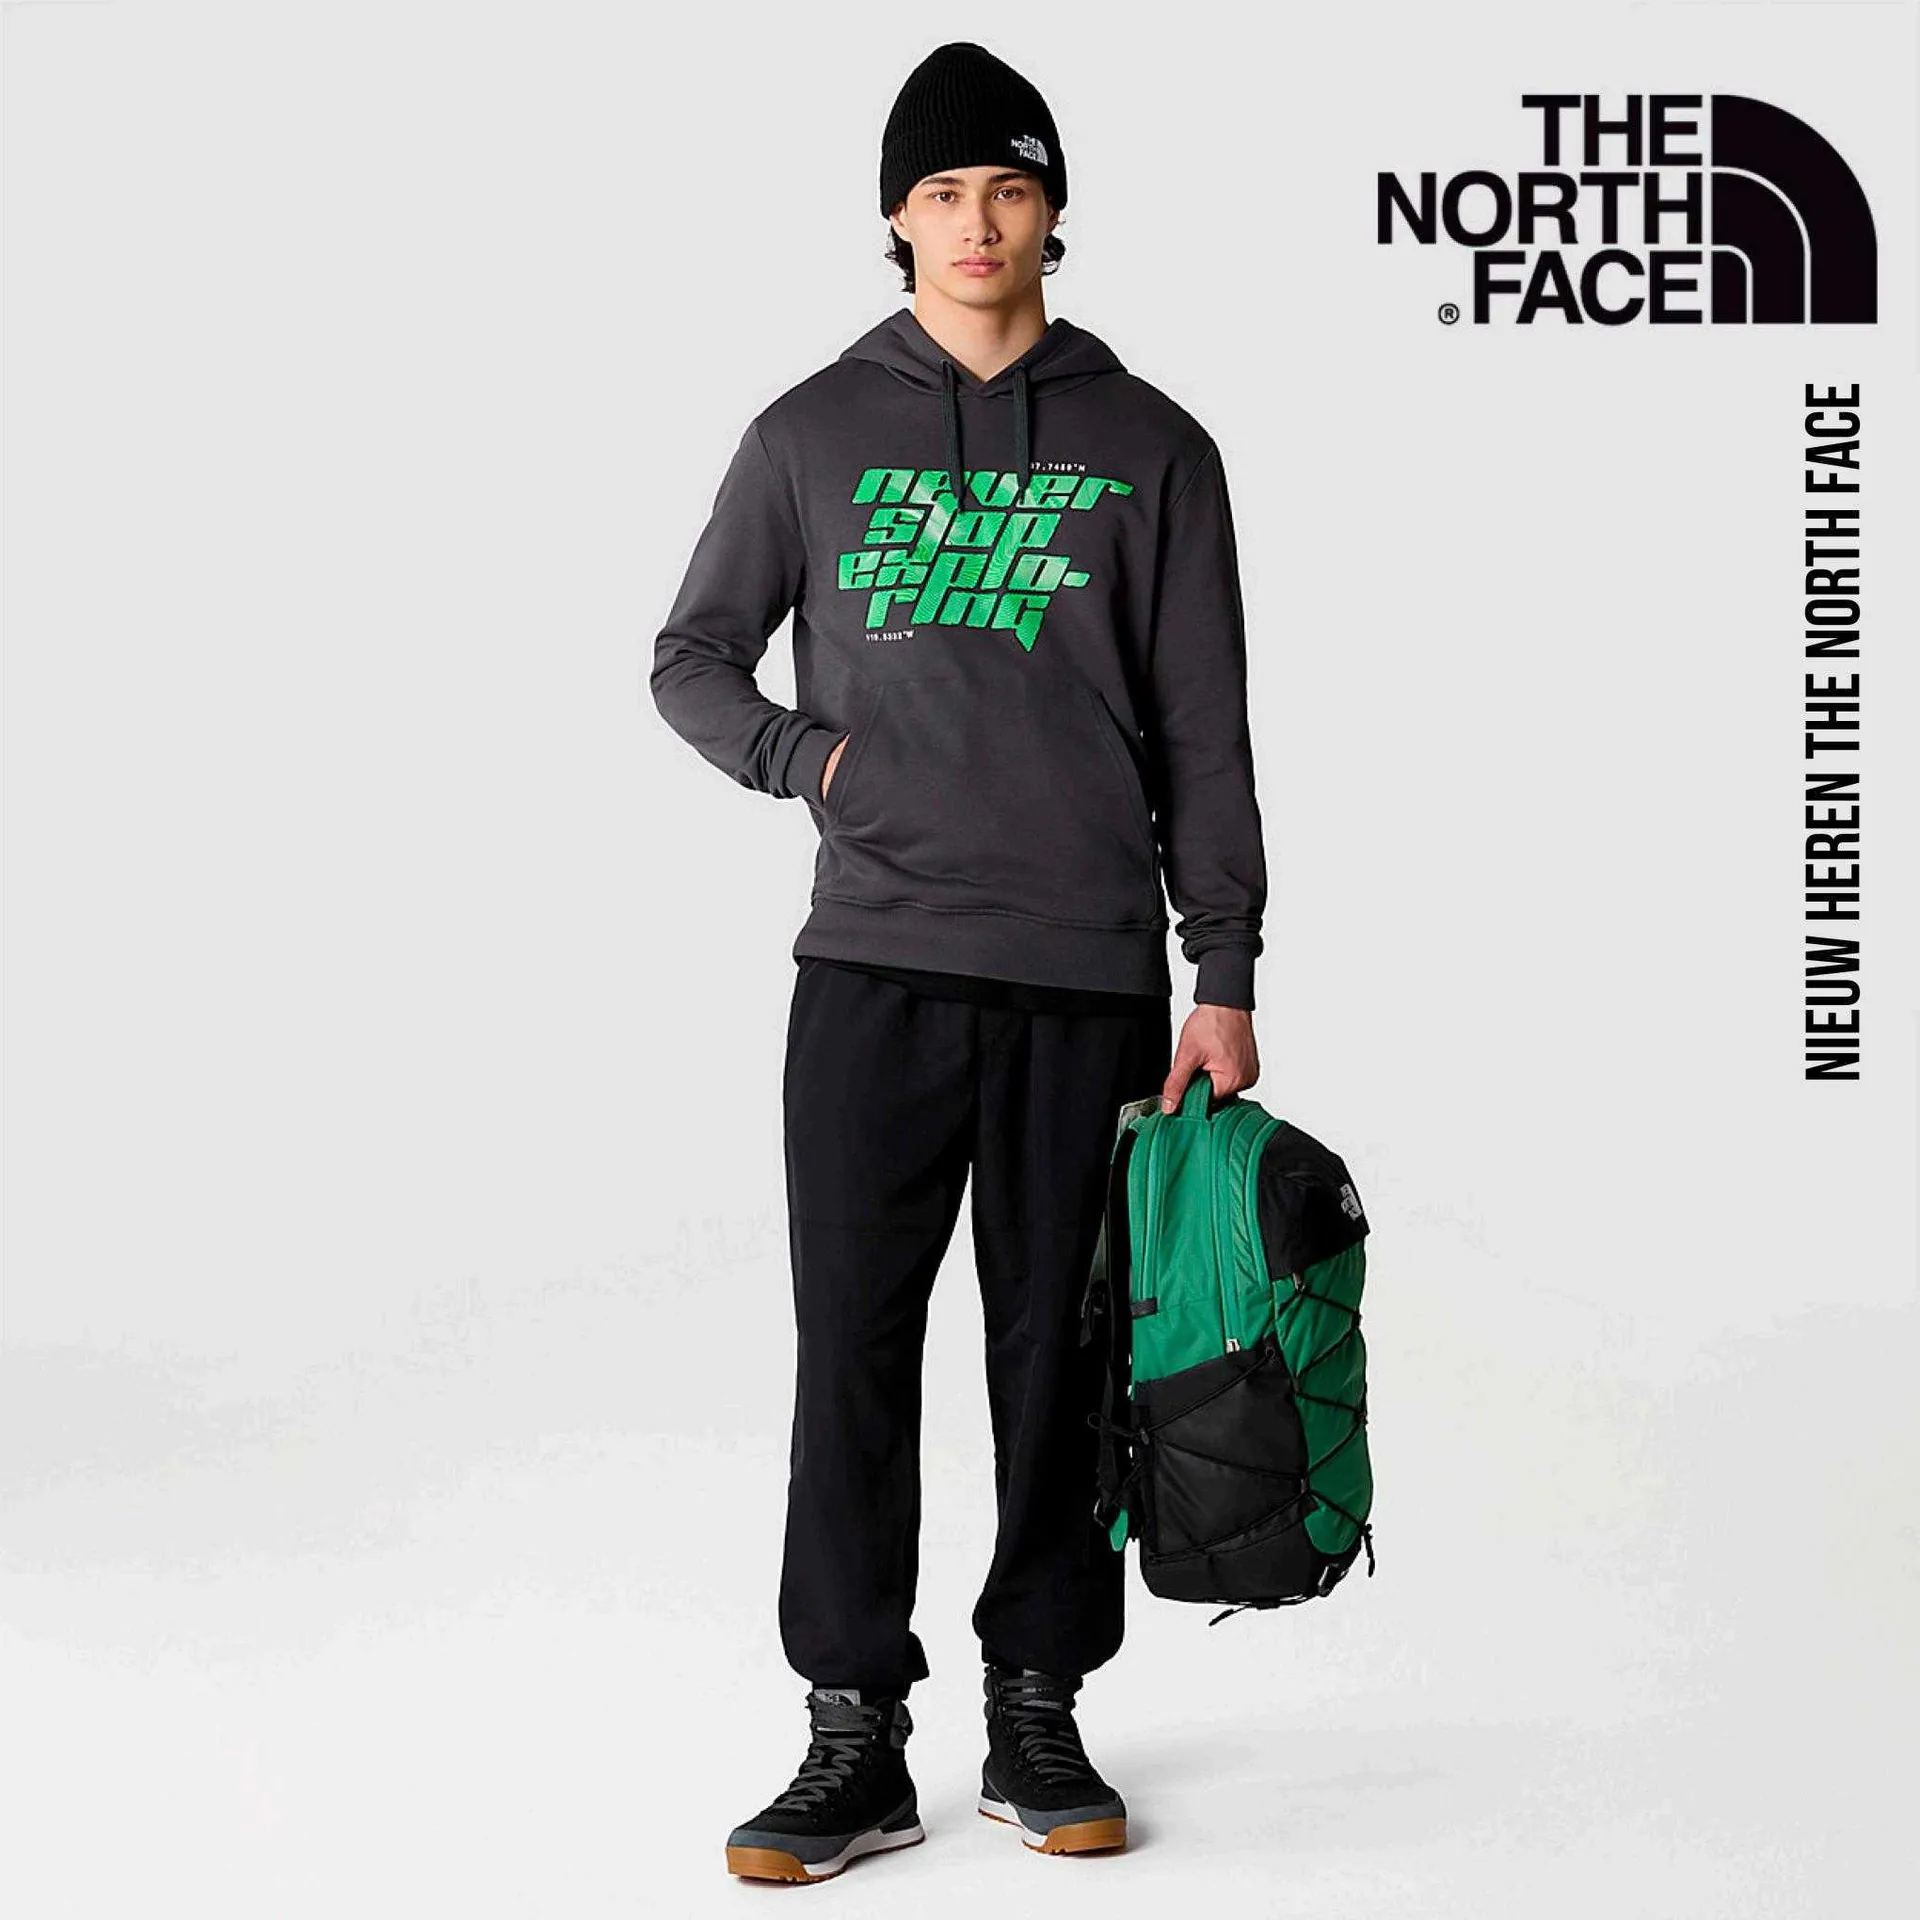 The North Face Folder - 1